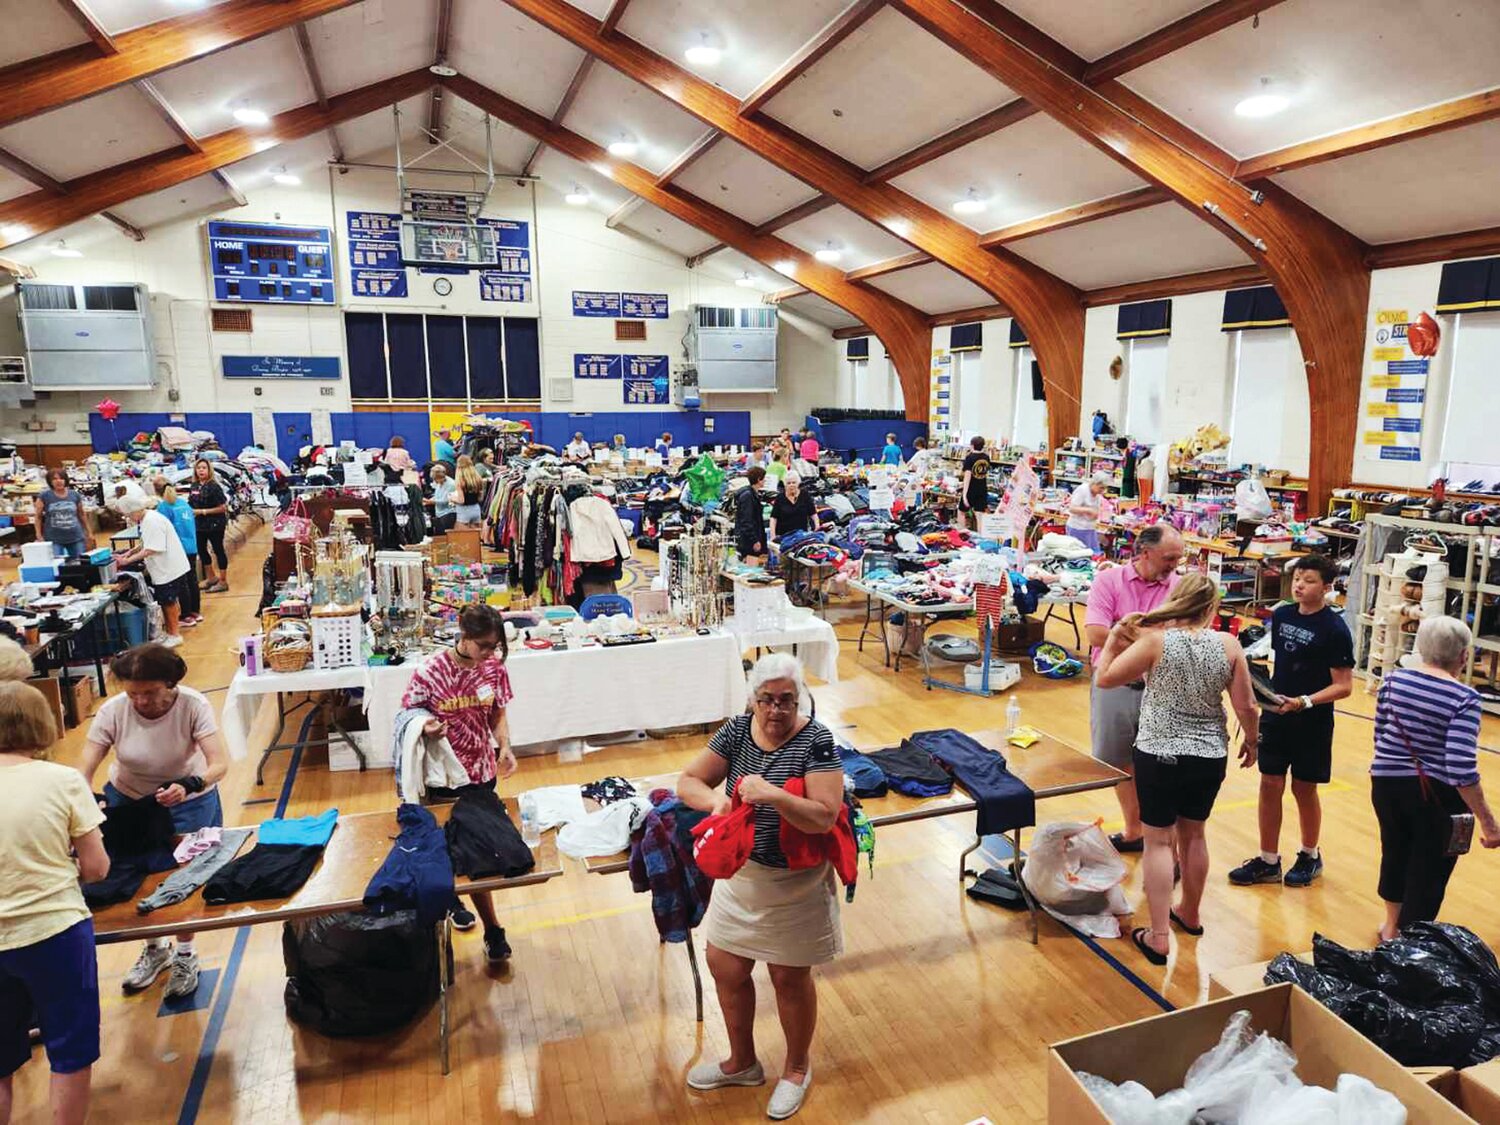 The Ladies of Mt. Carmel in Doylestown recently held their 30th annual rummage sale.